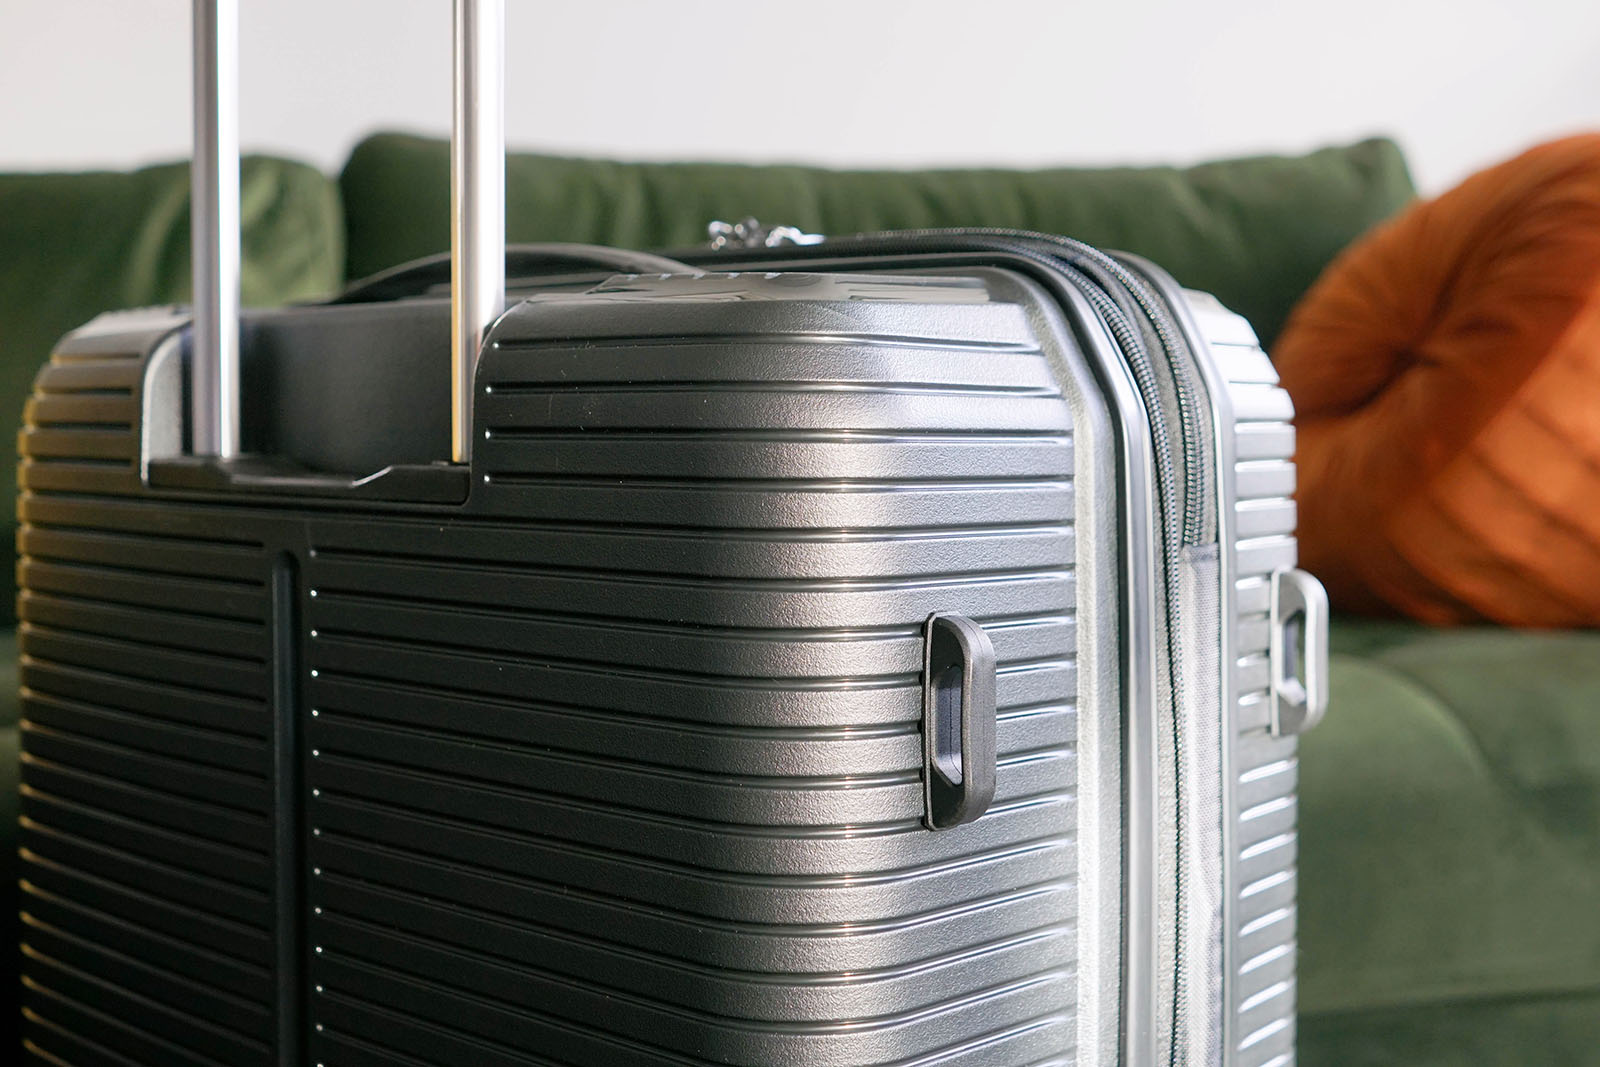 Verage Rome 24″ large hardside expandable luggage review